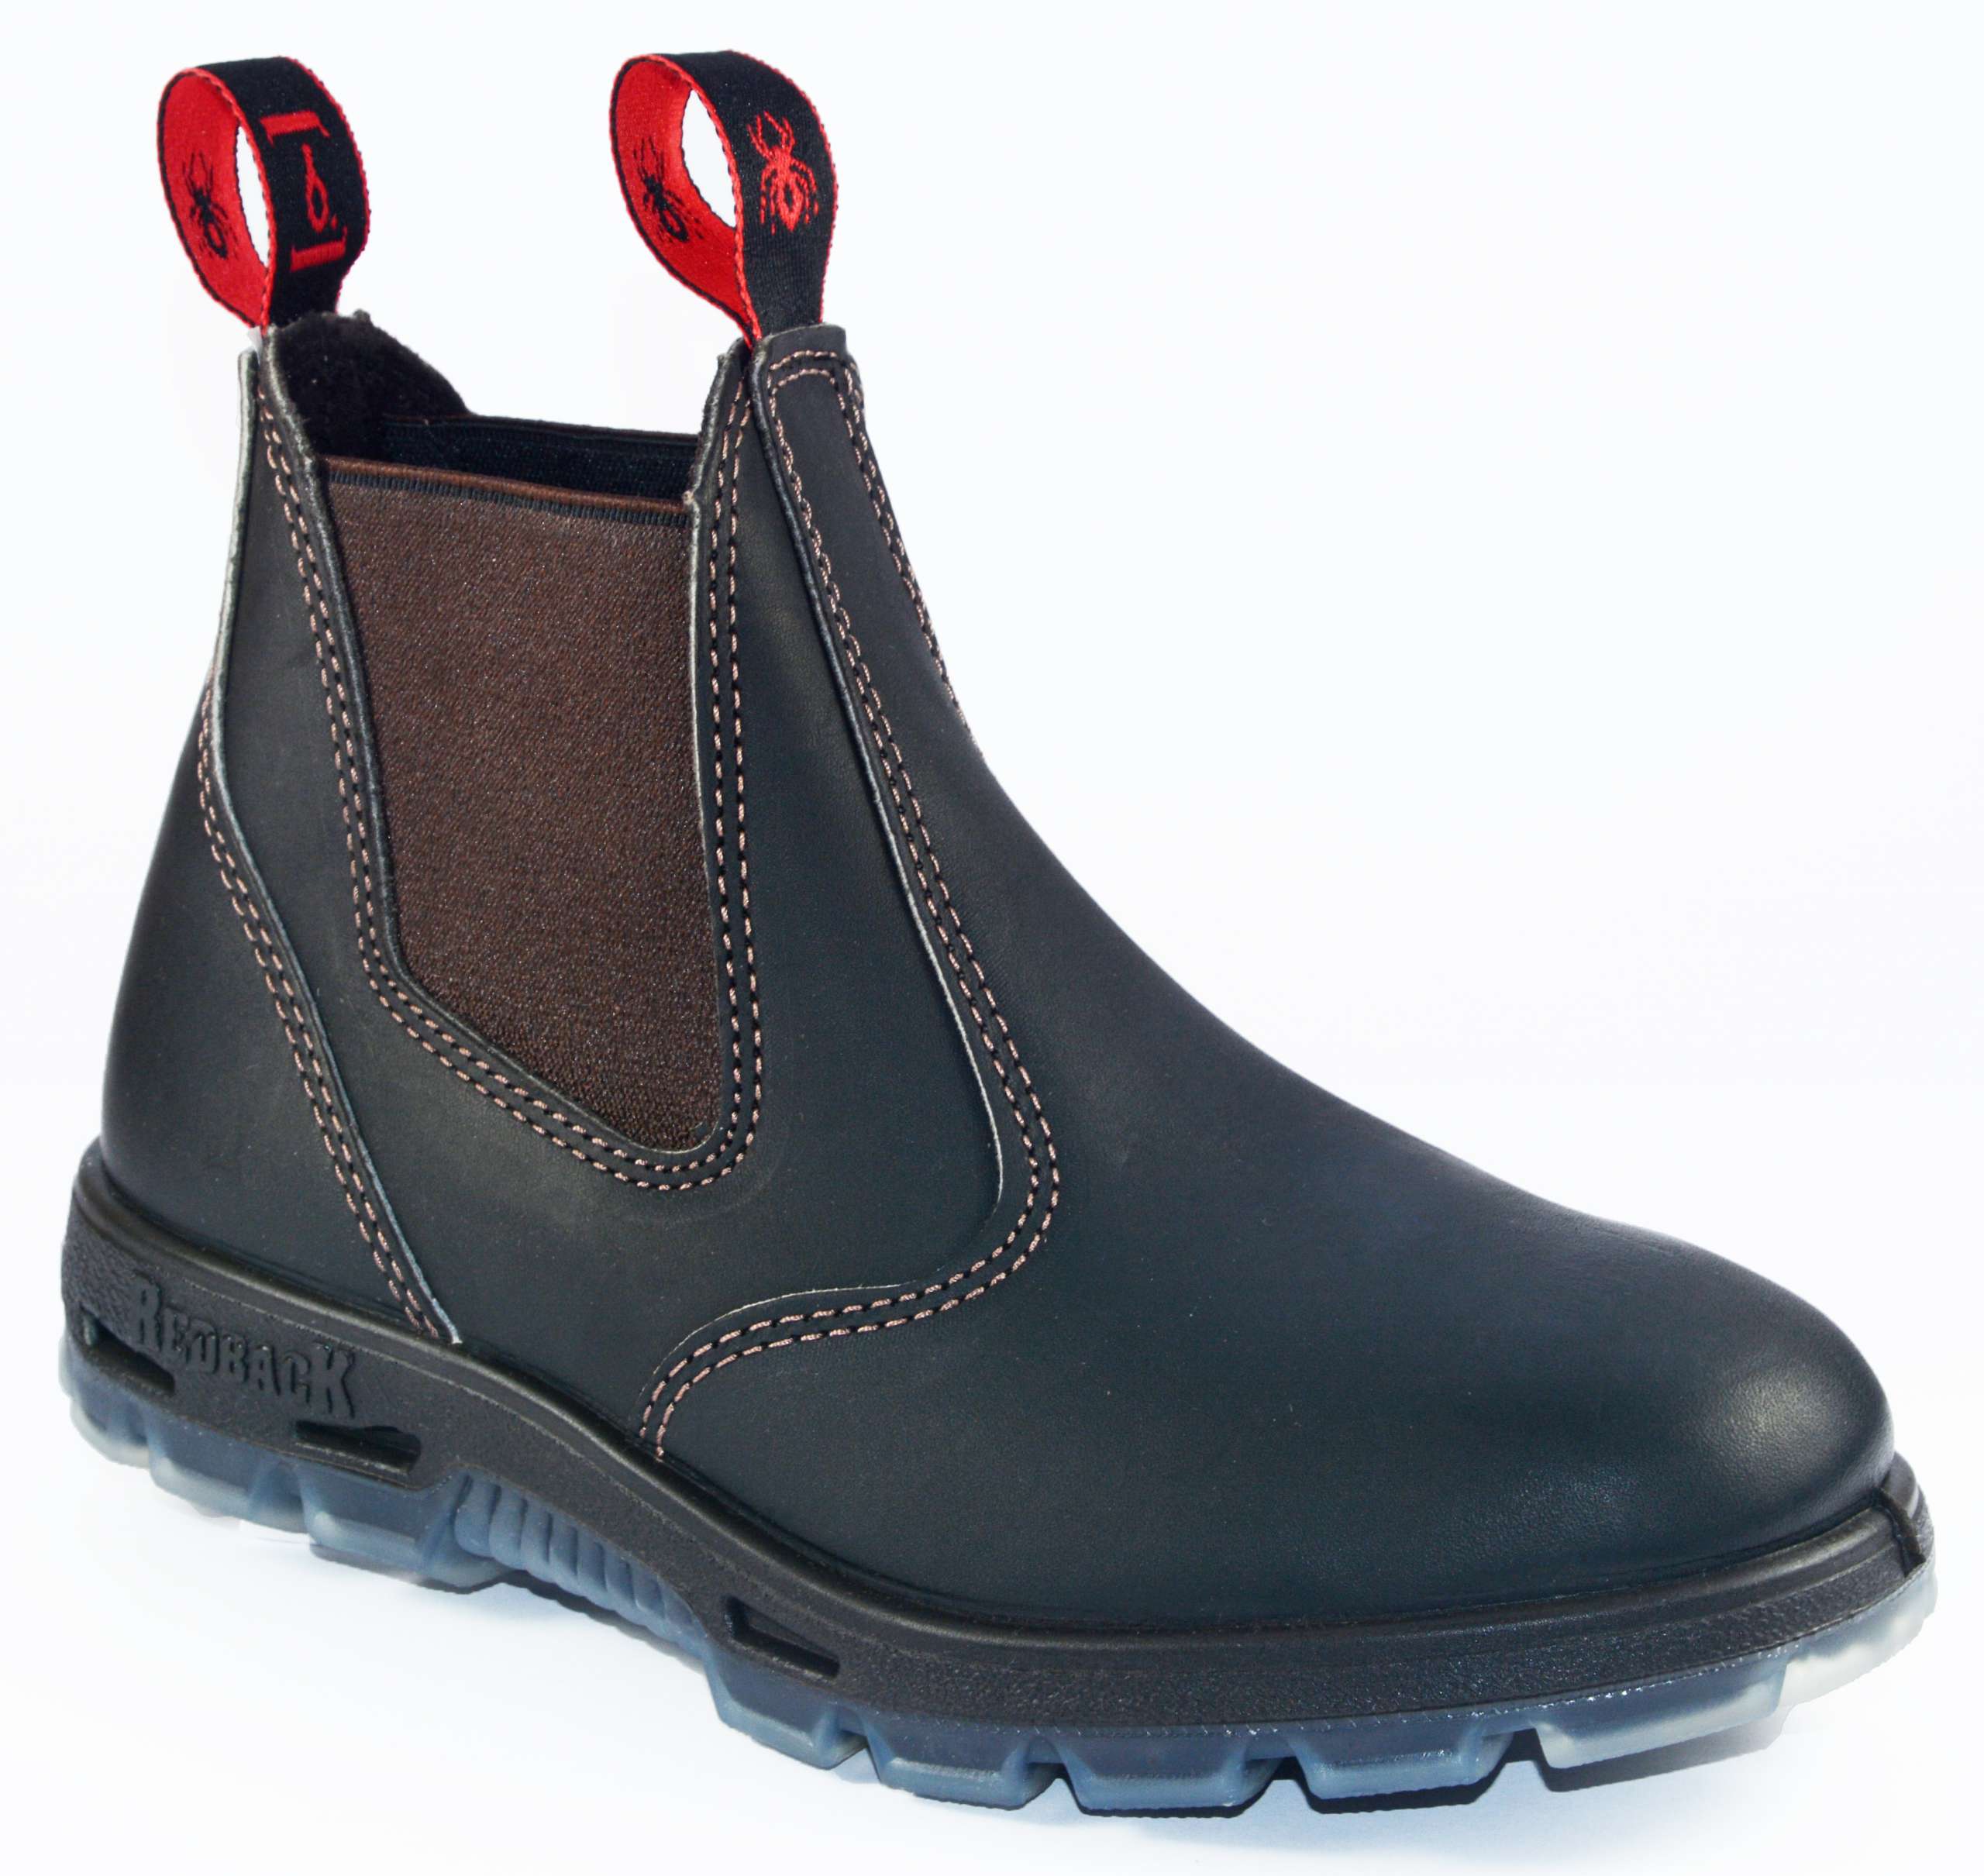 Redback Dealer Boot in Brown Leather UBOK